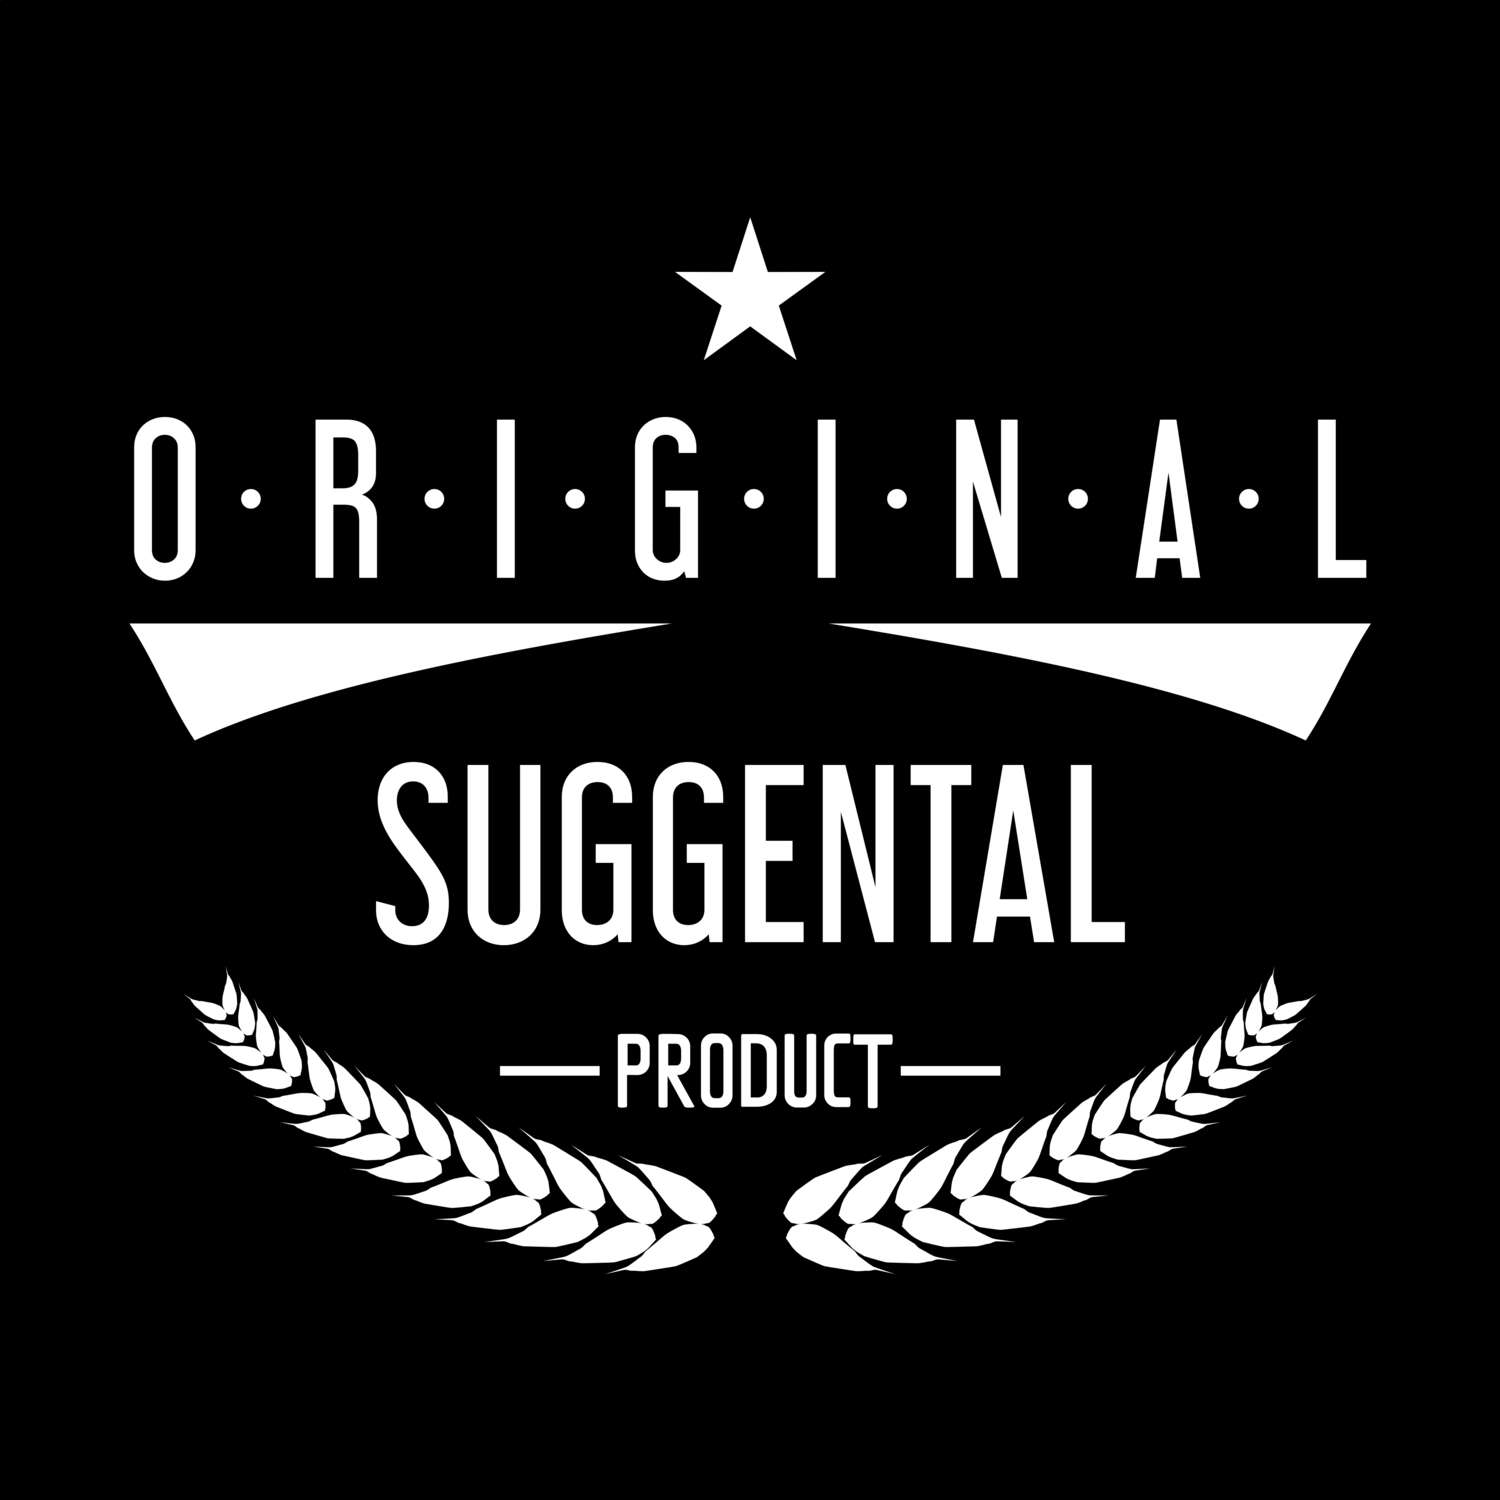 Suggental T-Shirt »Original Product«